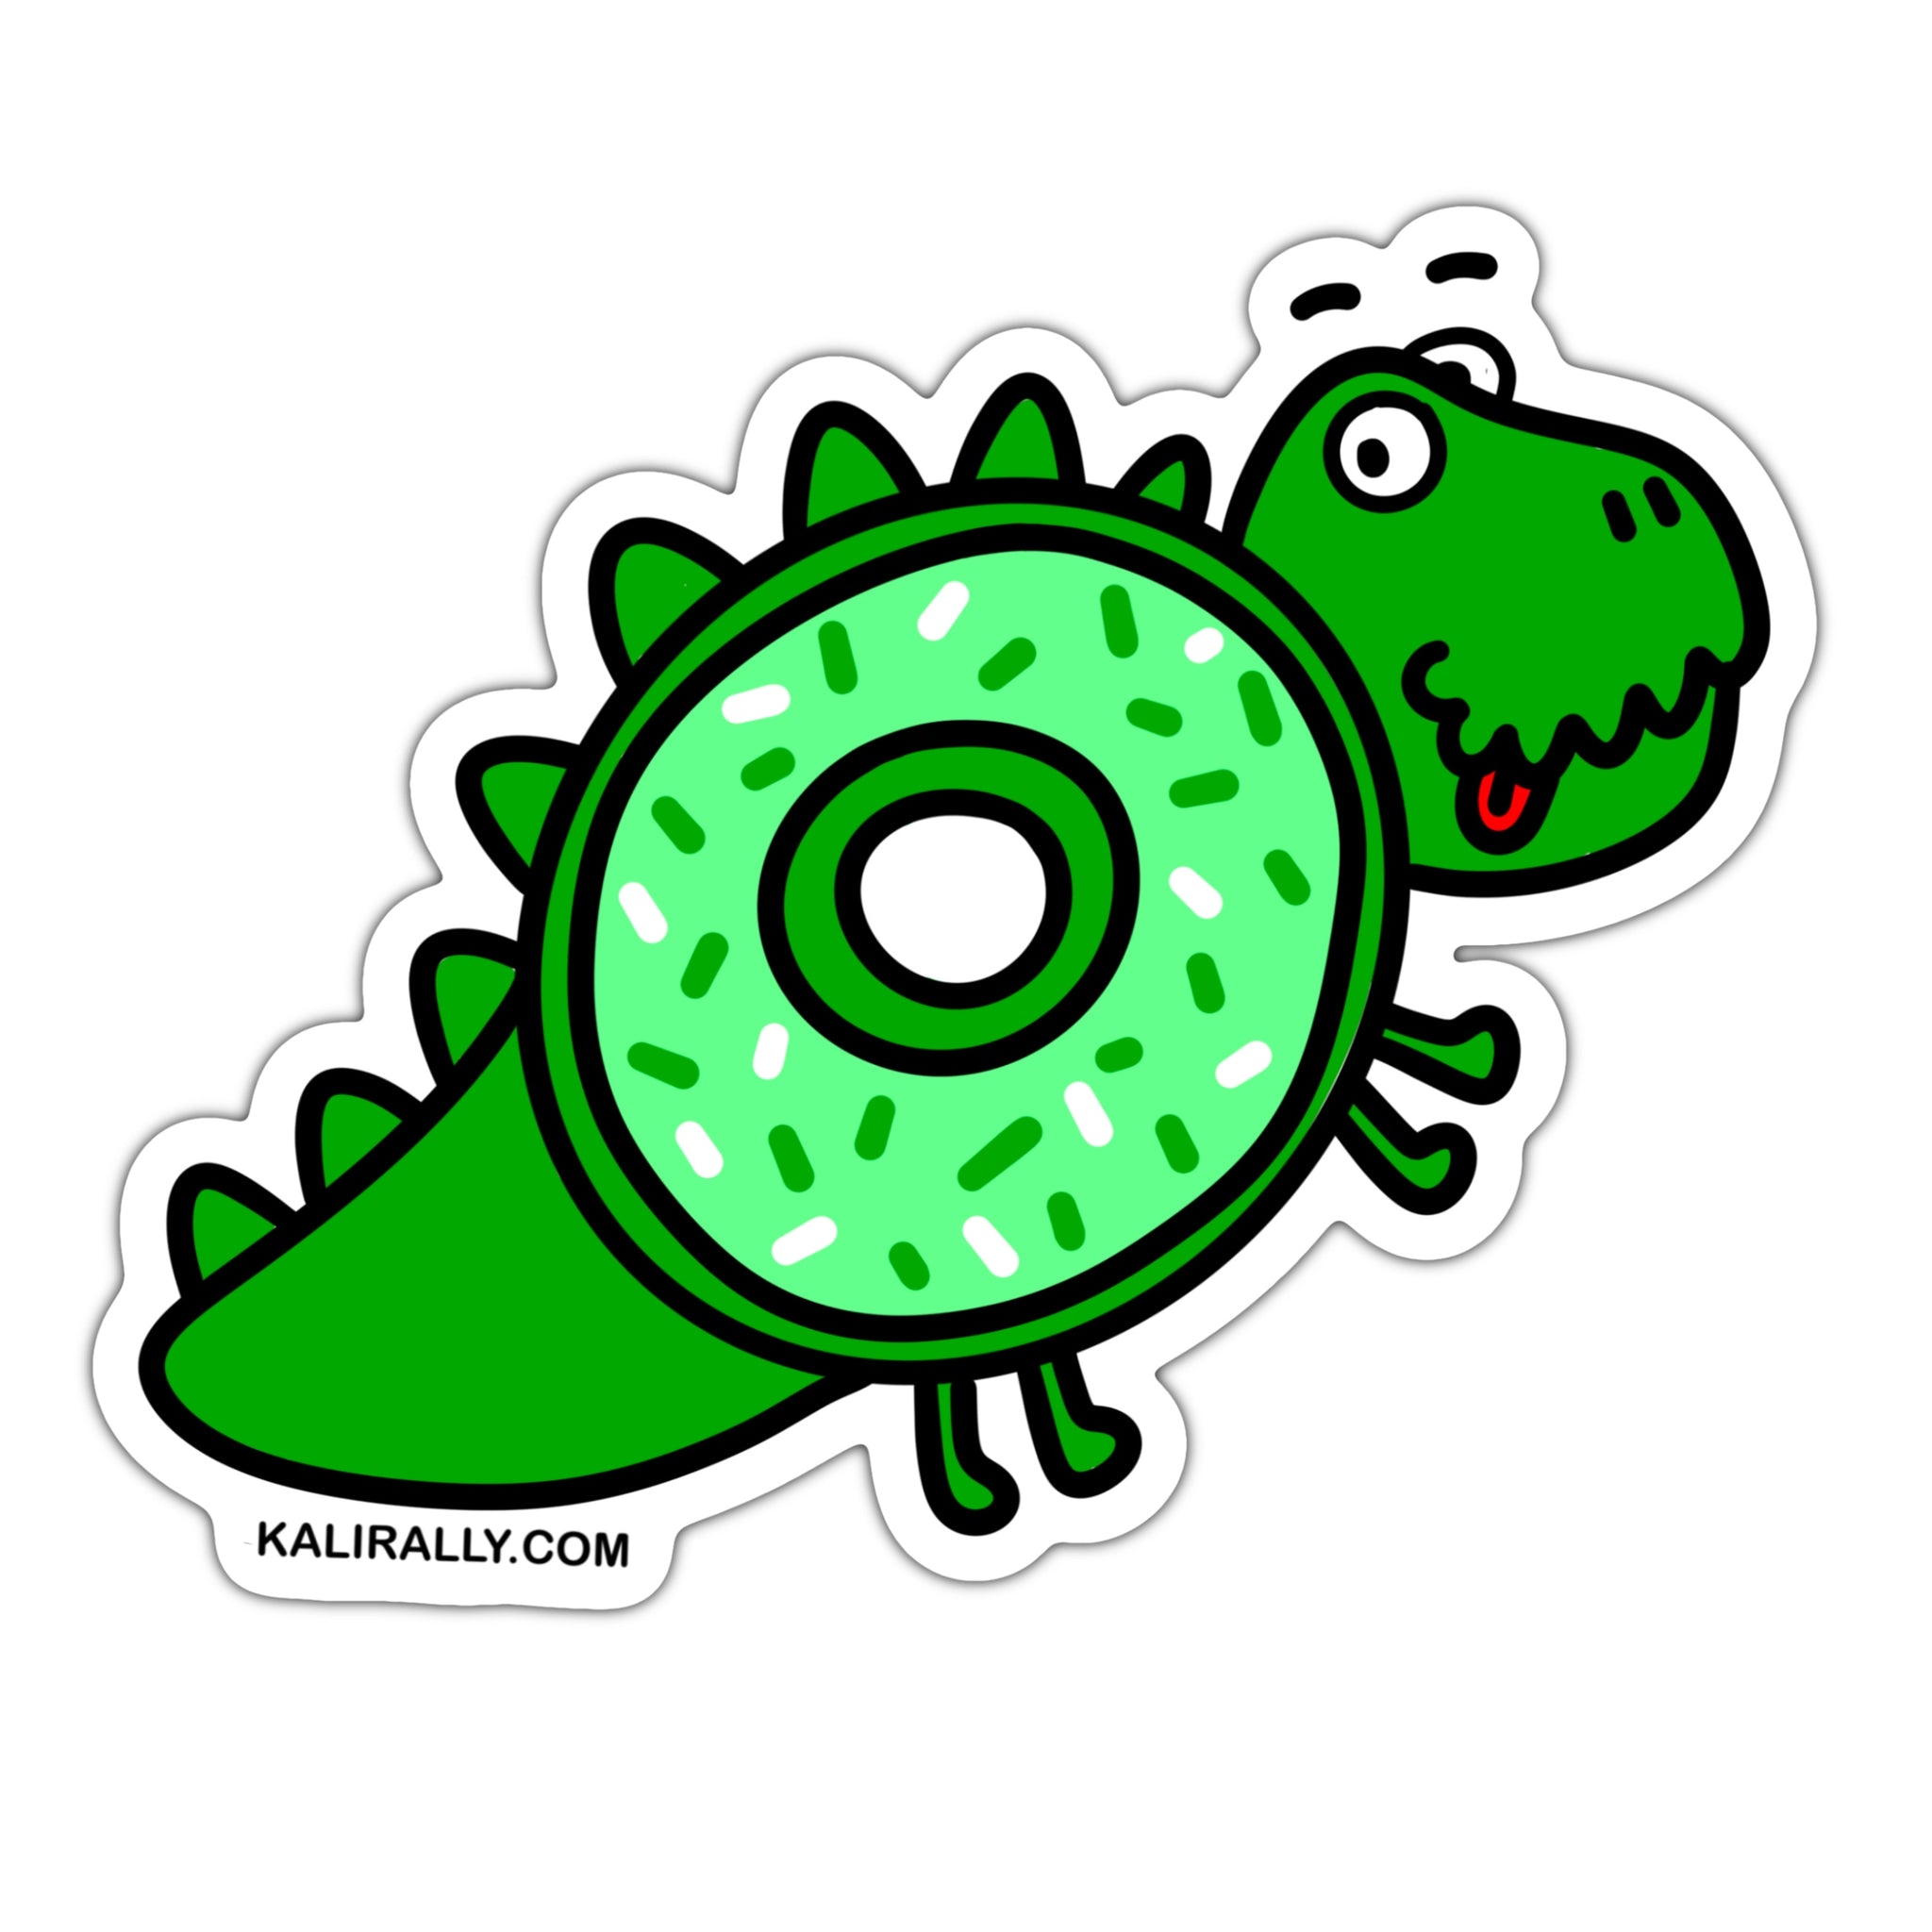 Donutsaurus sticker, declious dinosaur donut sticker, funny donut sticker, waterproof vinyl sticker